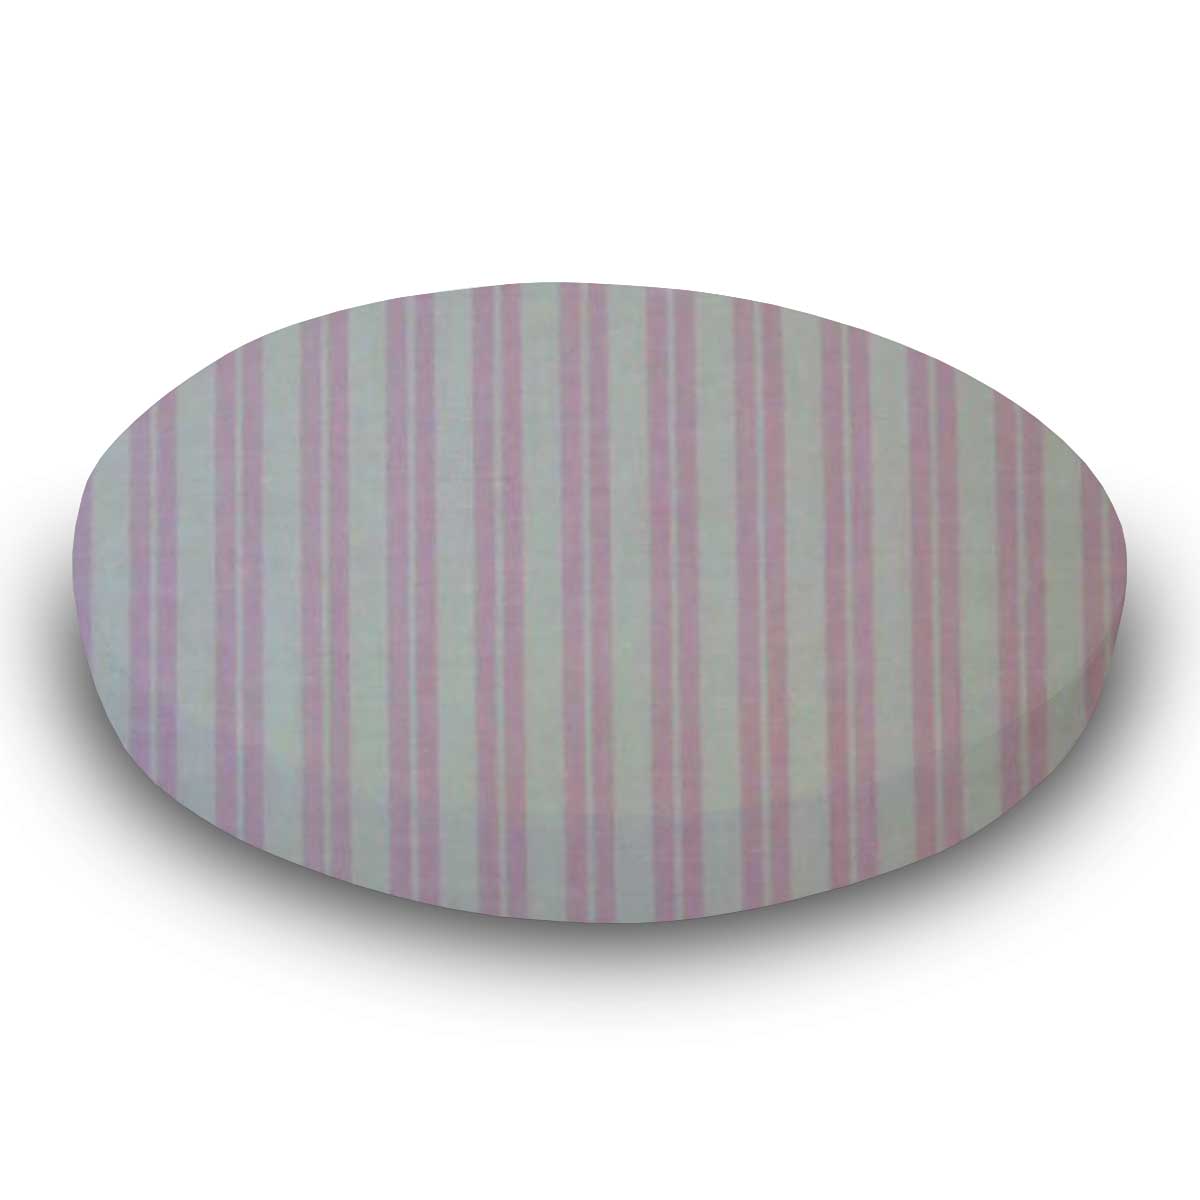 sk-w814 Oval Crib (Stokke Sleepi) - Pink Dual Stripe - Fit sku sk-w814